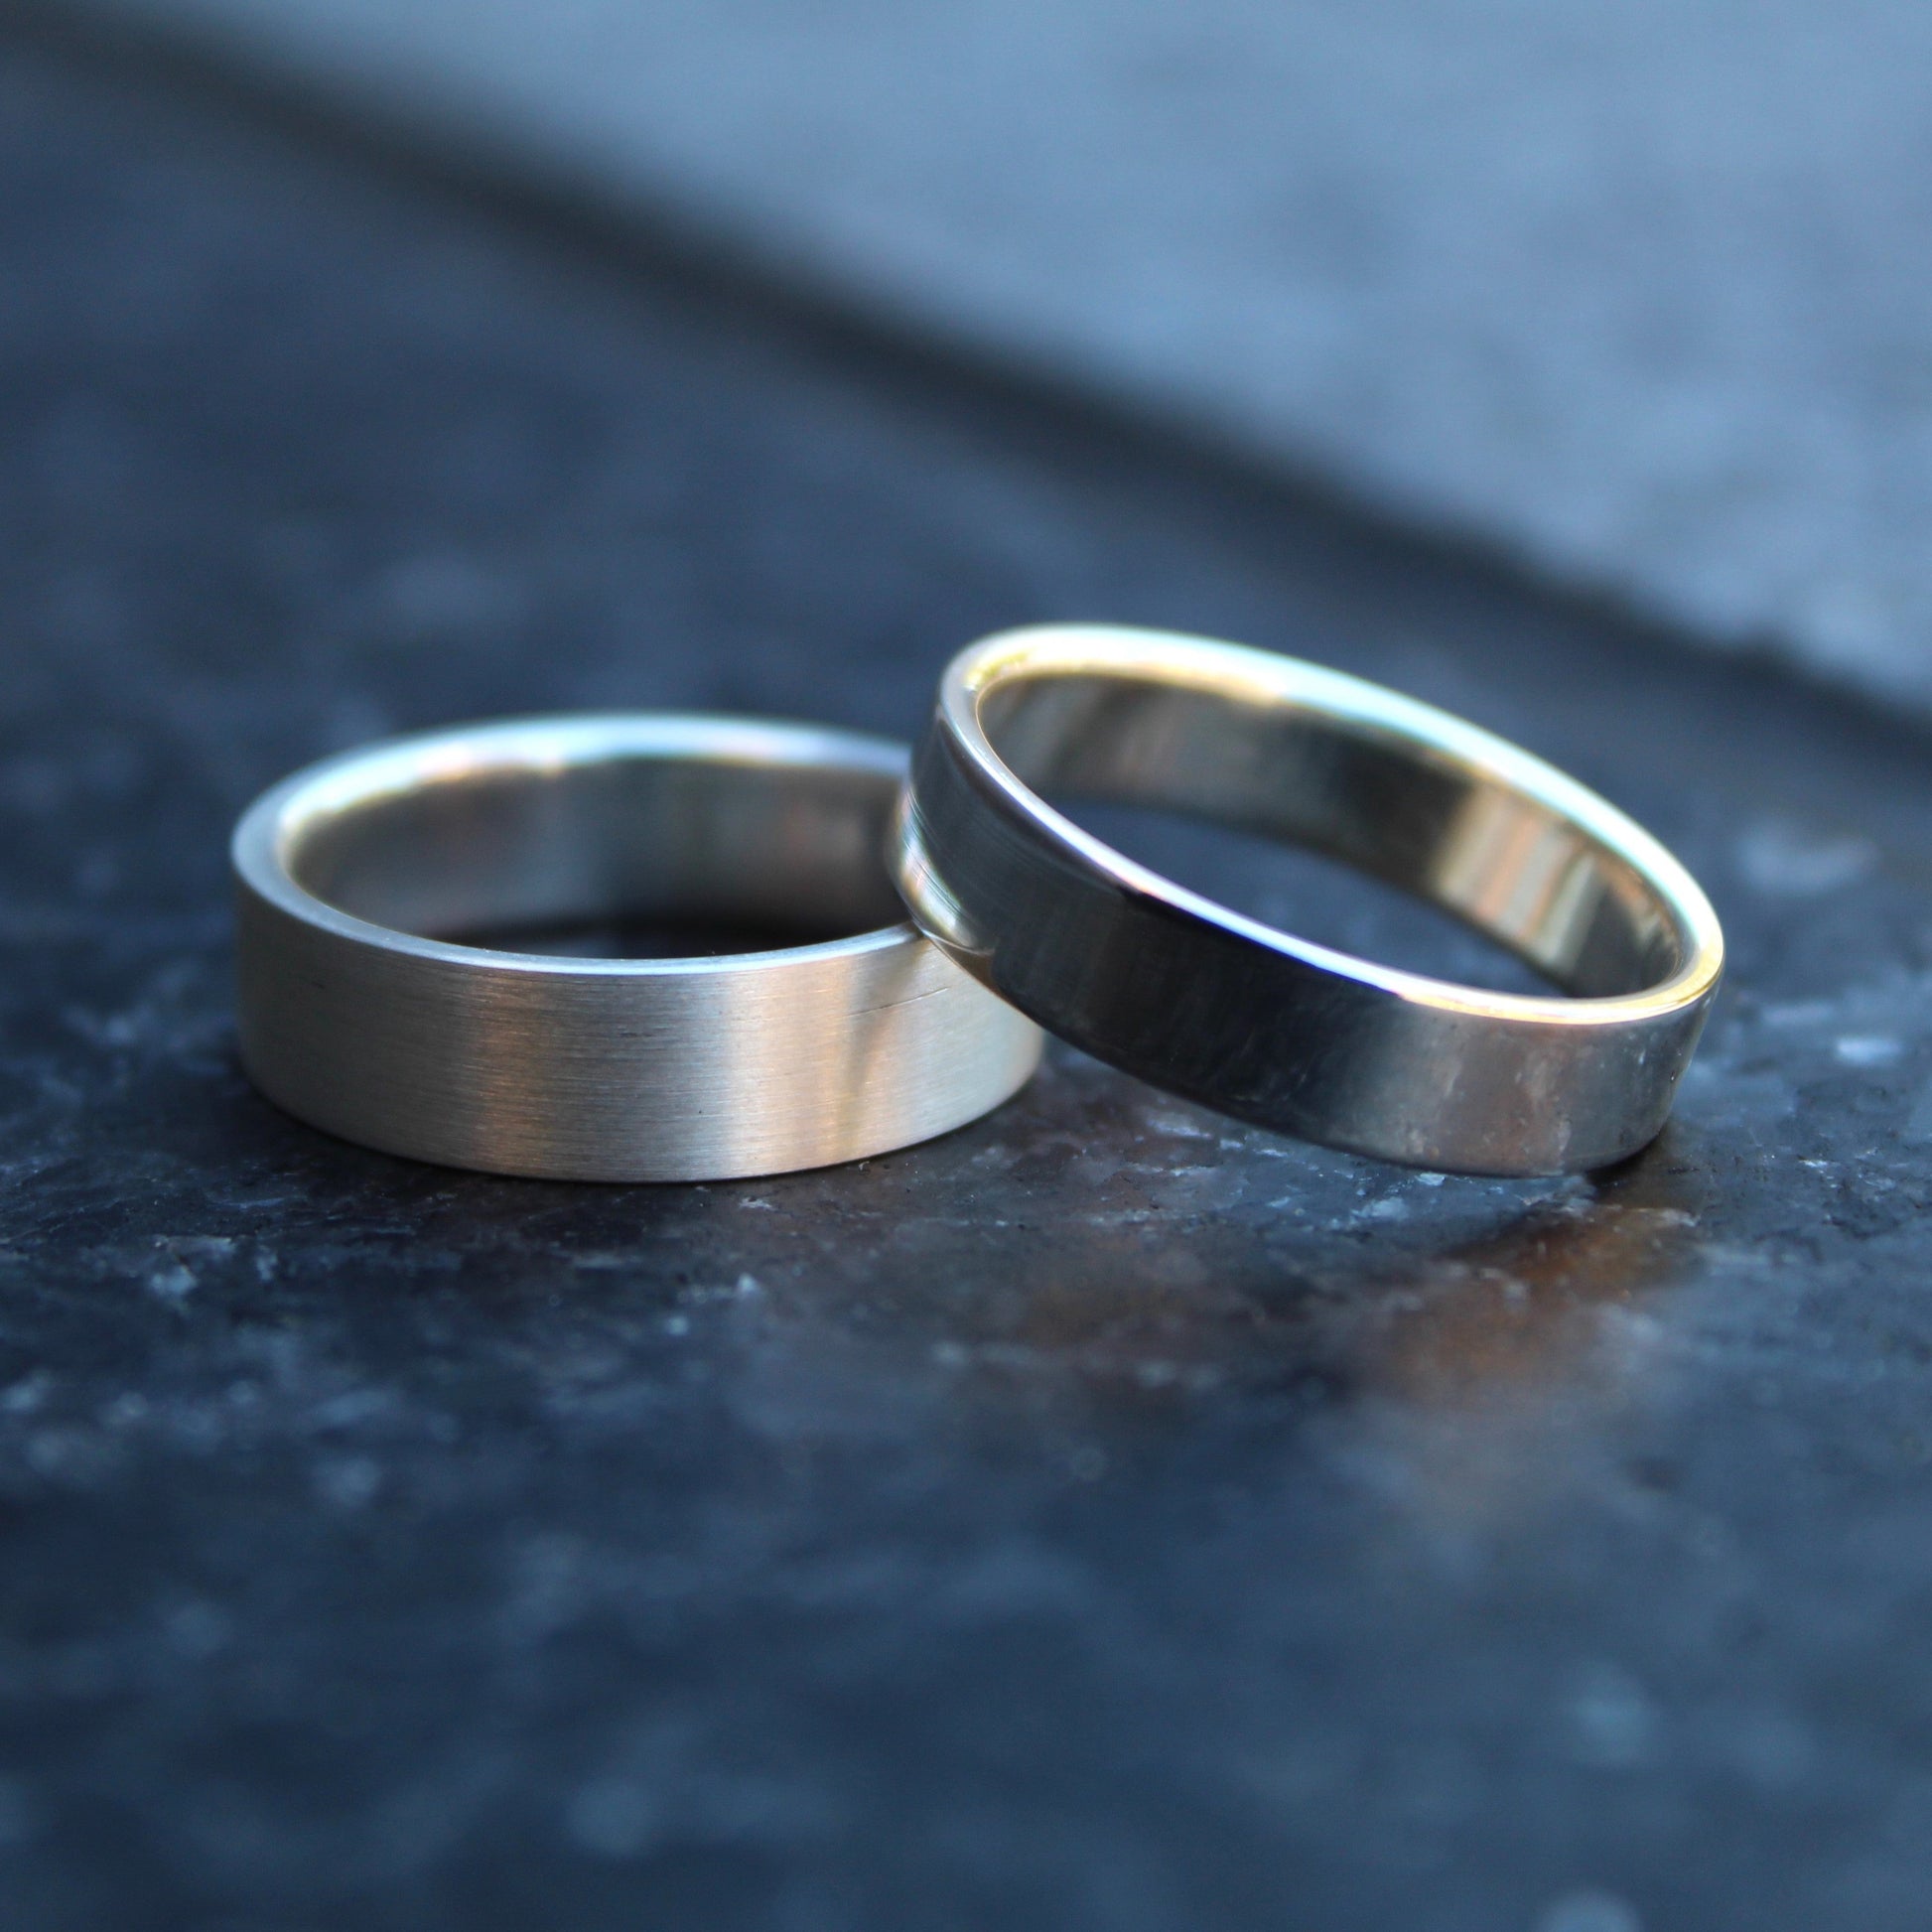 Silver rings simple design